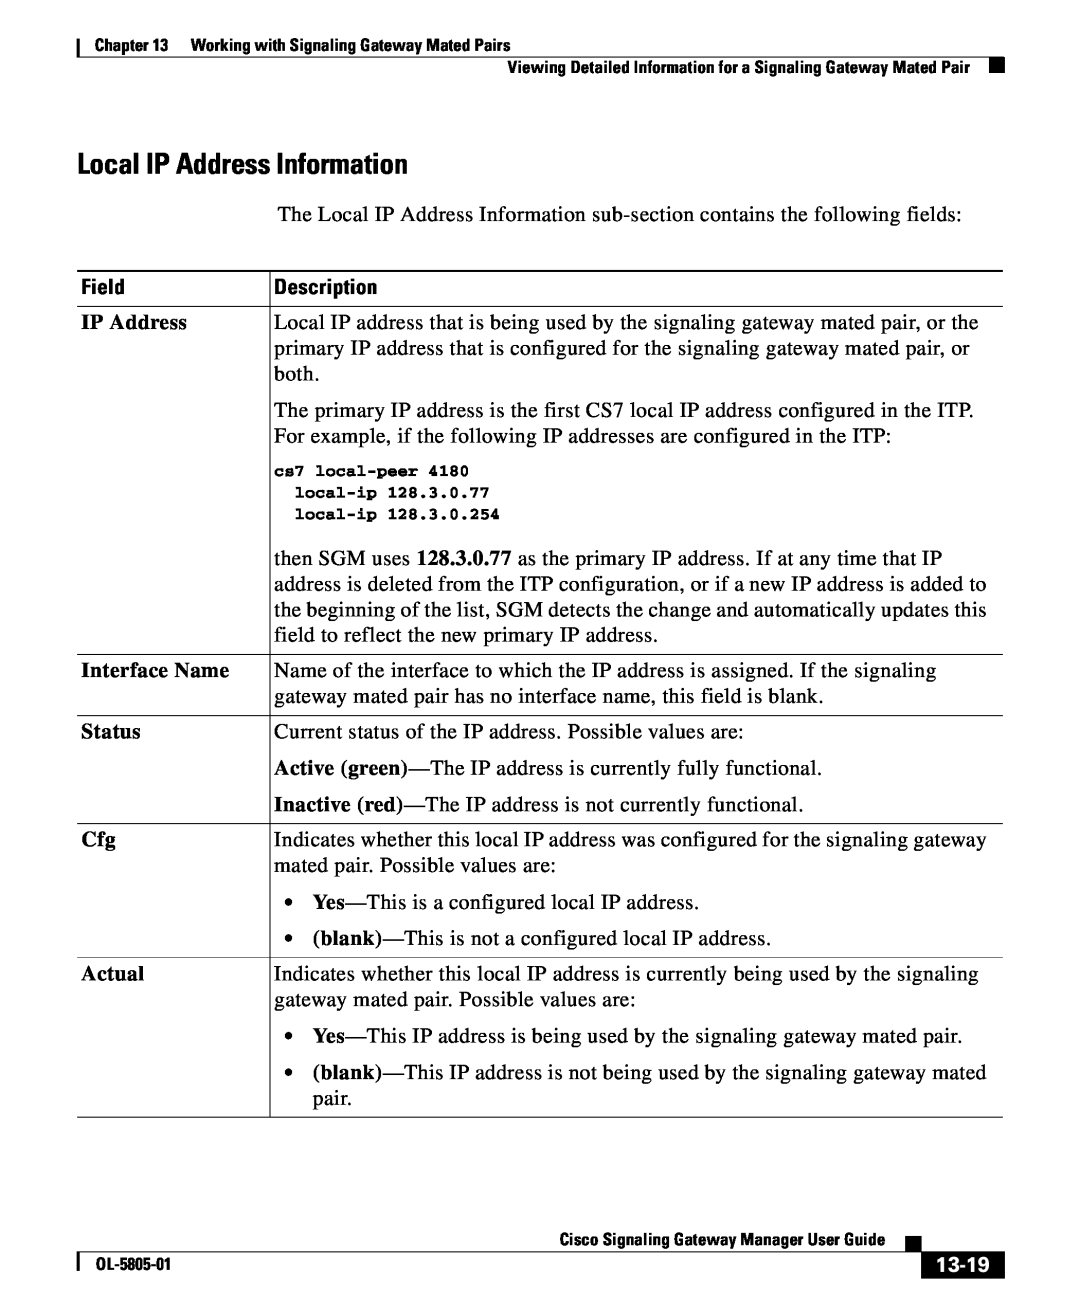 Cisco Systems OL-5805-01 manual Local IP Address Information, 13-19, Field, Description 